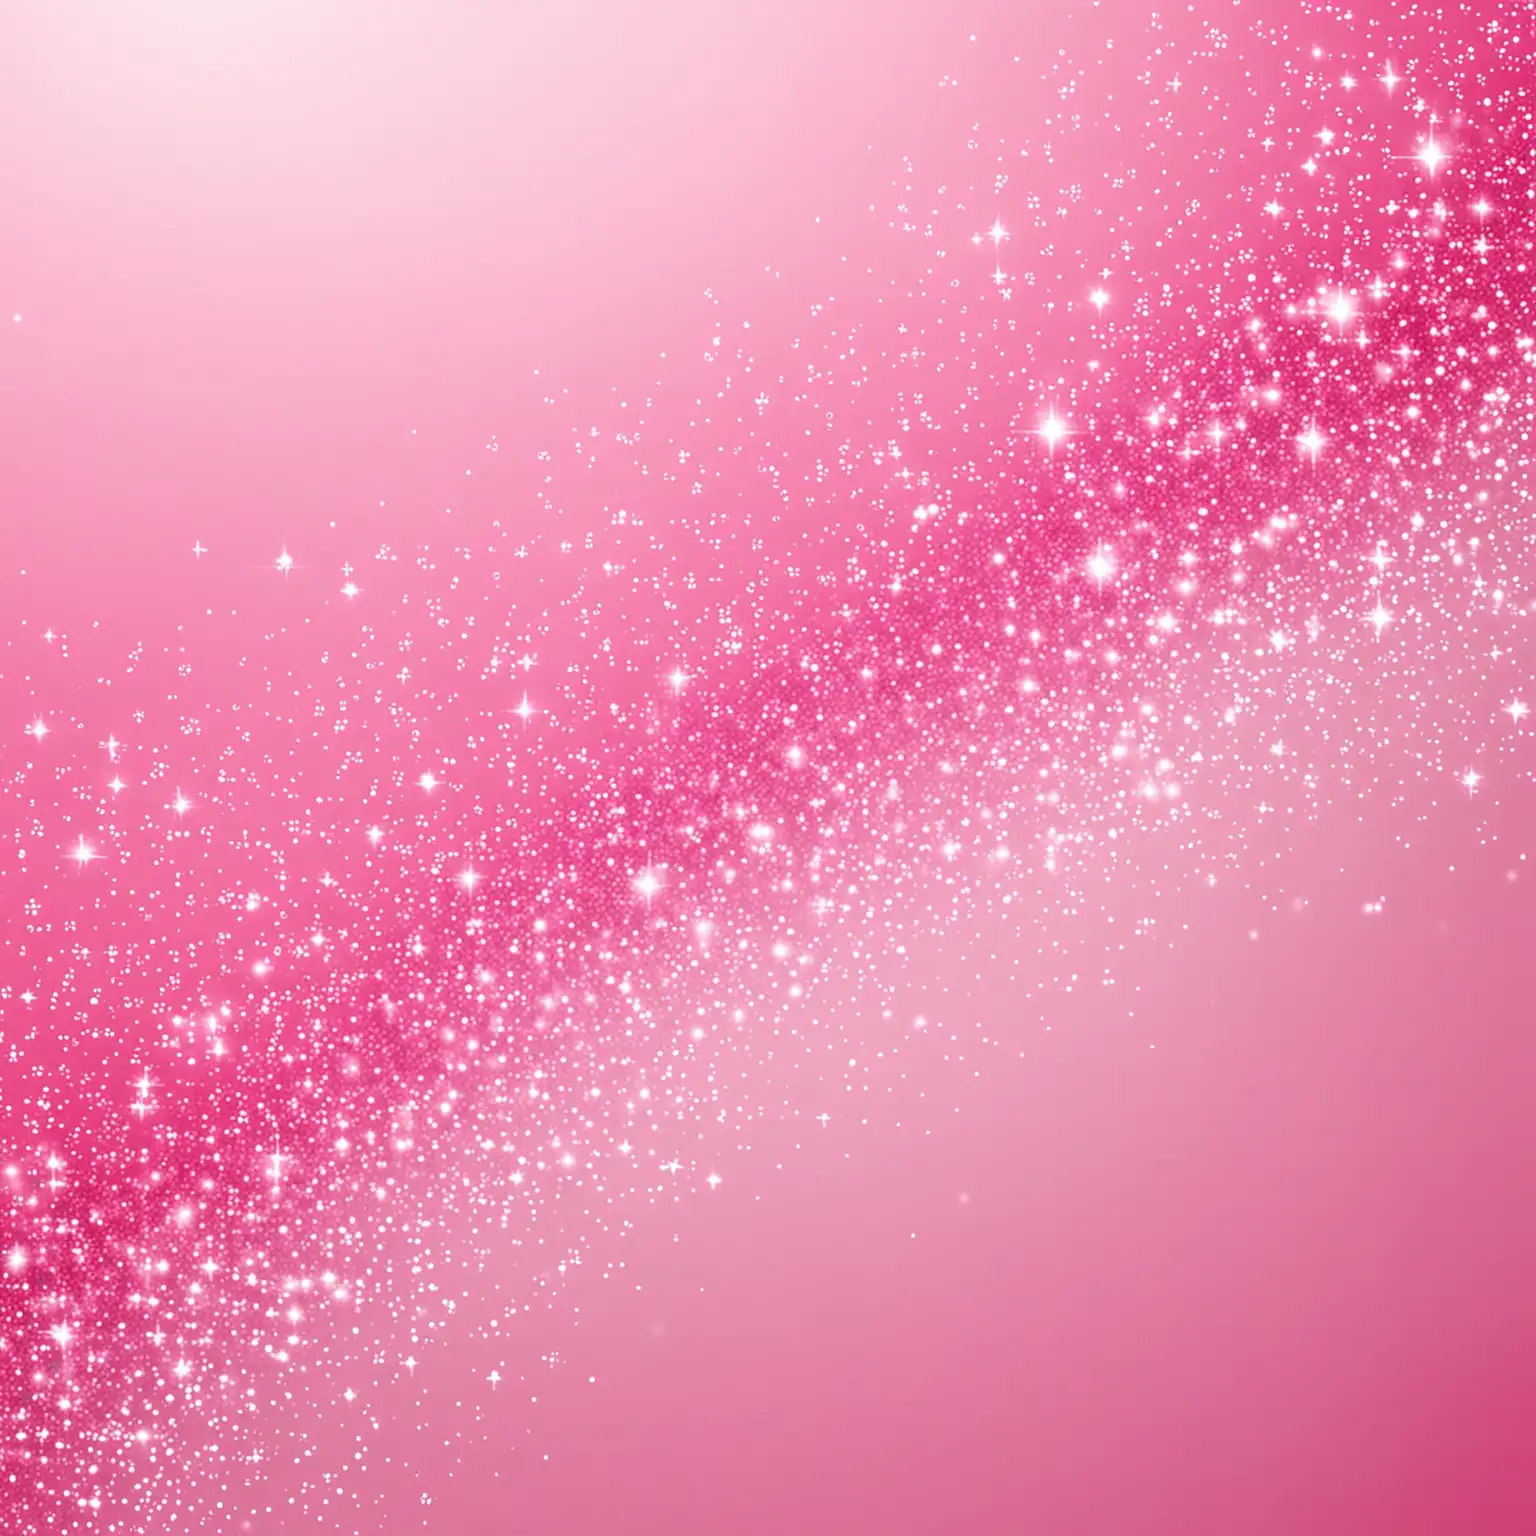 Glamorous Pink Sparkle Background for Fashion Design